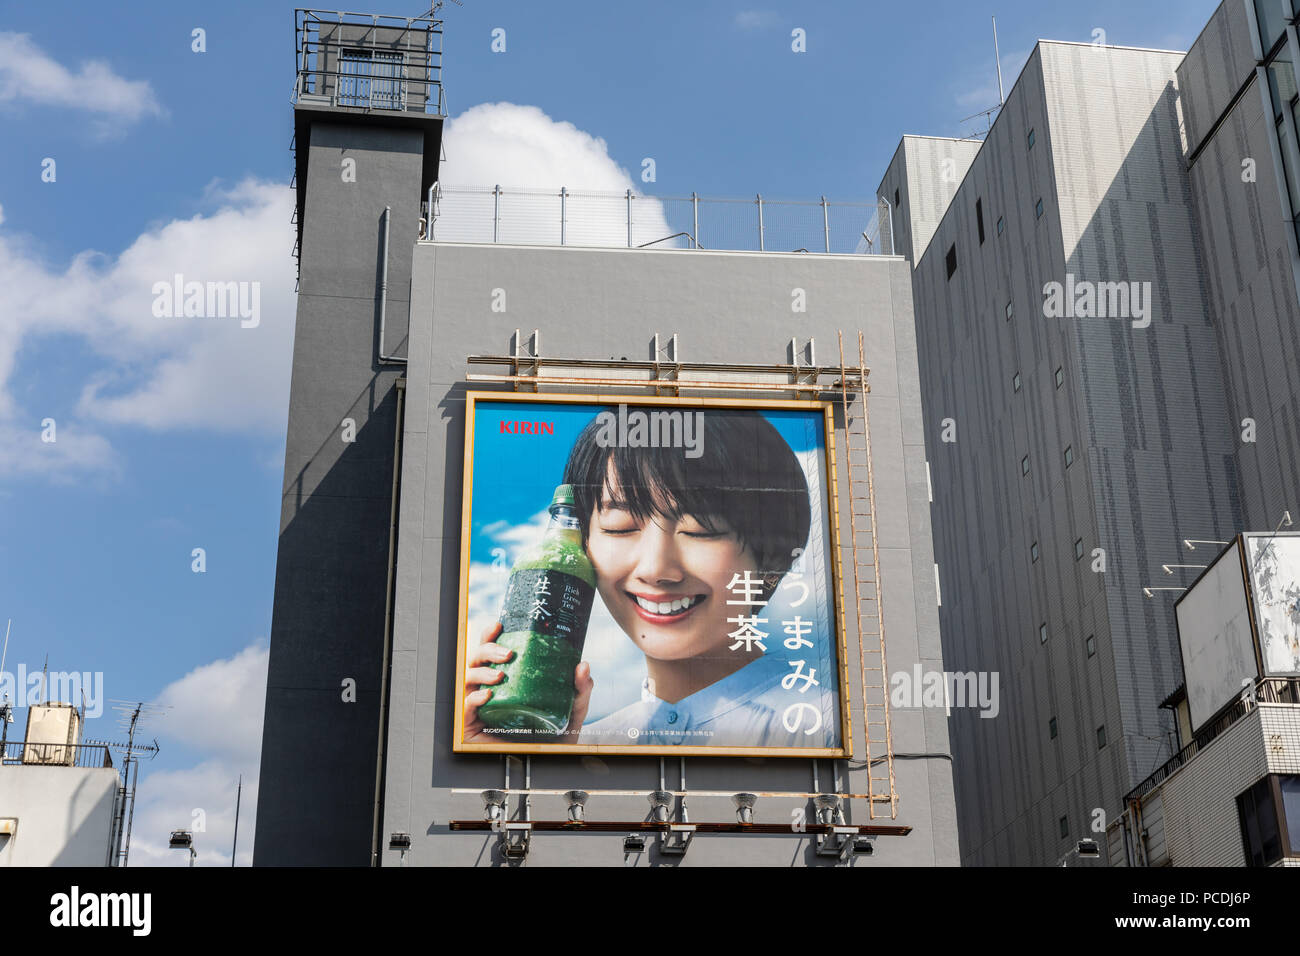 Kirin, Rich Green Tea (Japanese: 'namacha no umami' = 'the taste of raw tea'), billboard on building; Tokyo, Japan Stock Photo